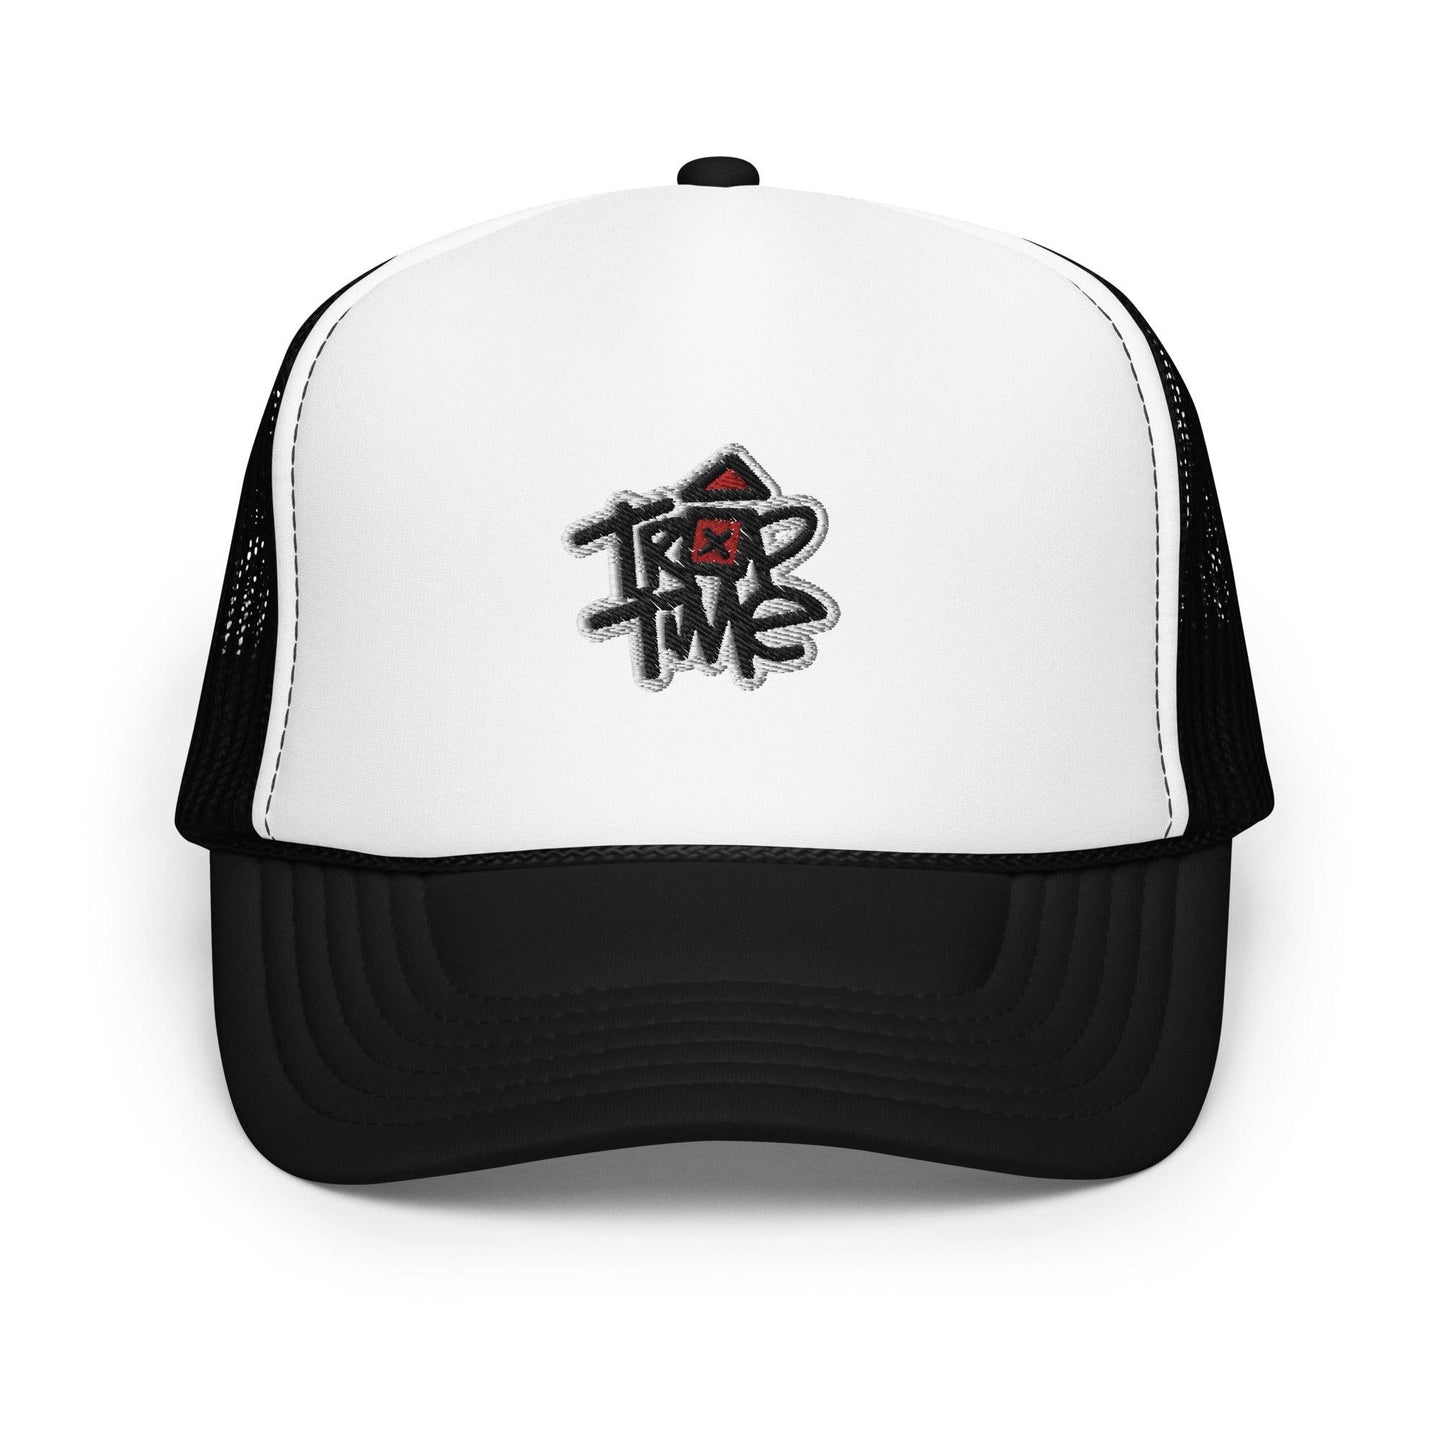 TrAp TiMe trucker hat - Drivestar Clothing